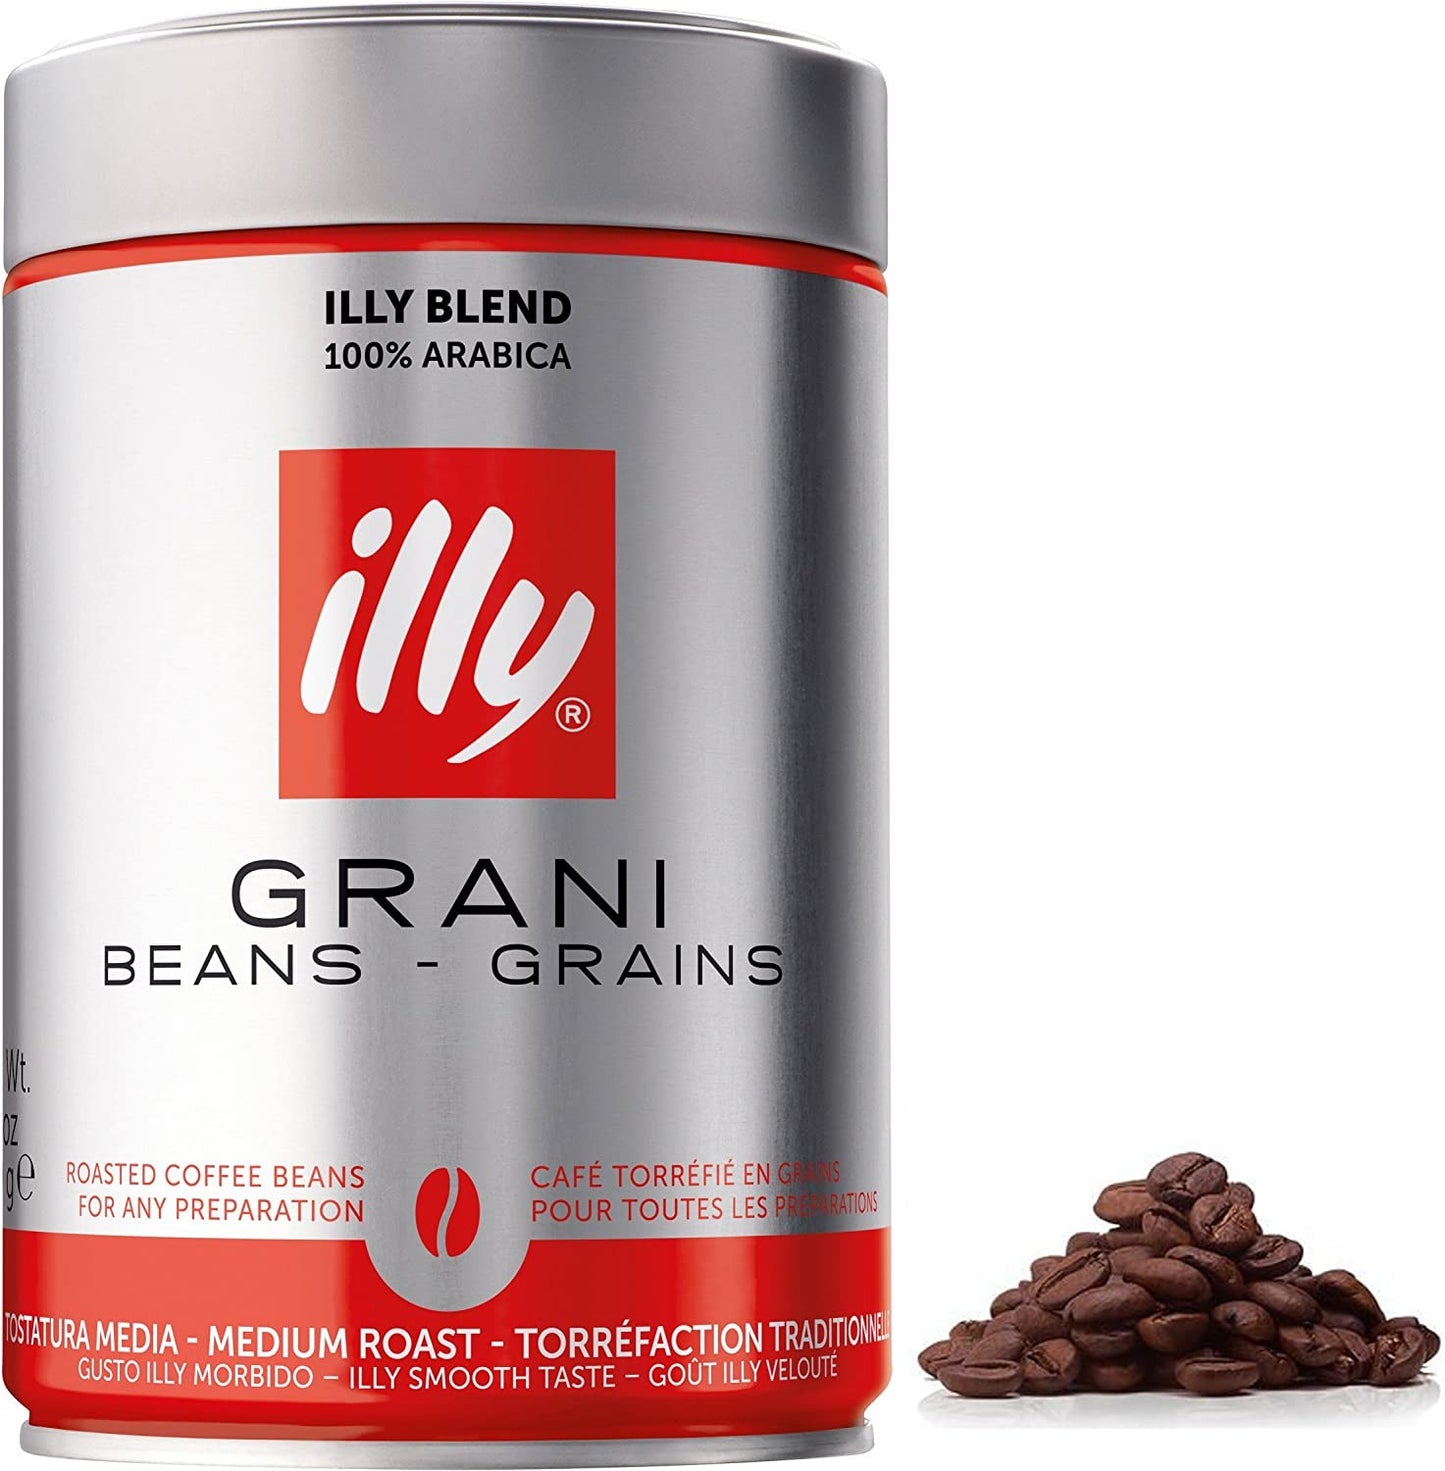 Illy Caffè in Gani - 250 g